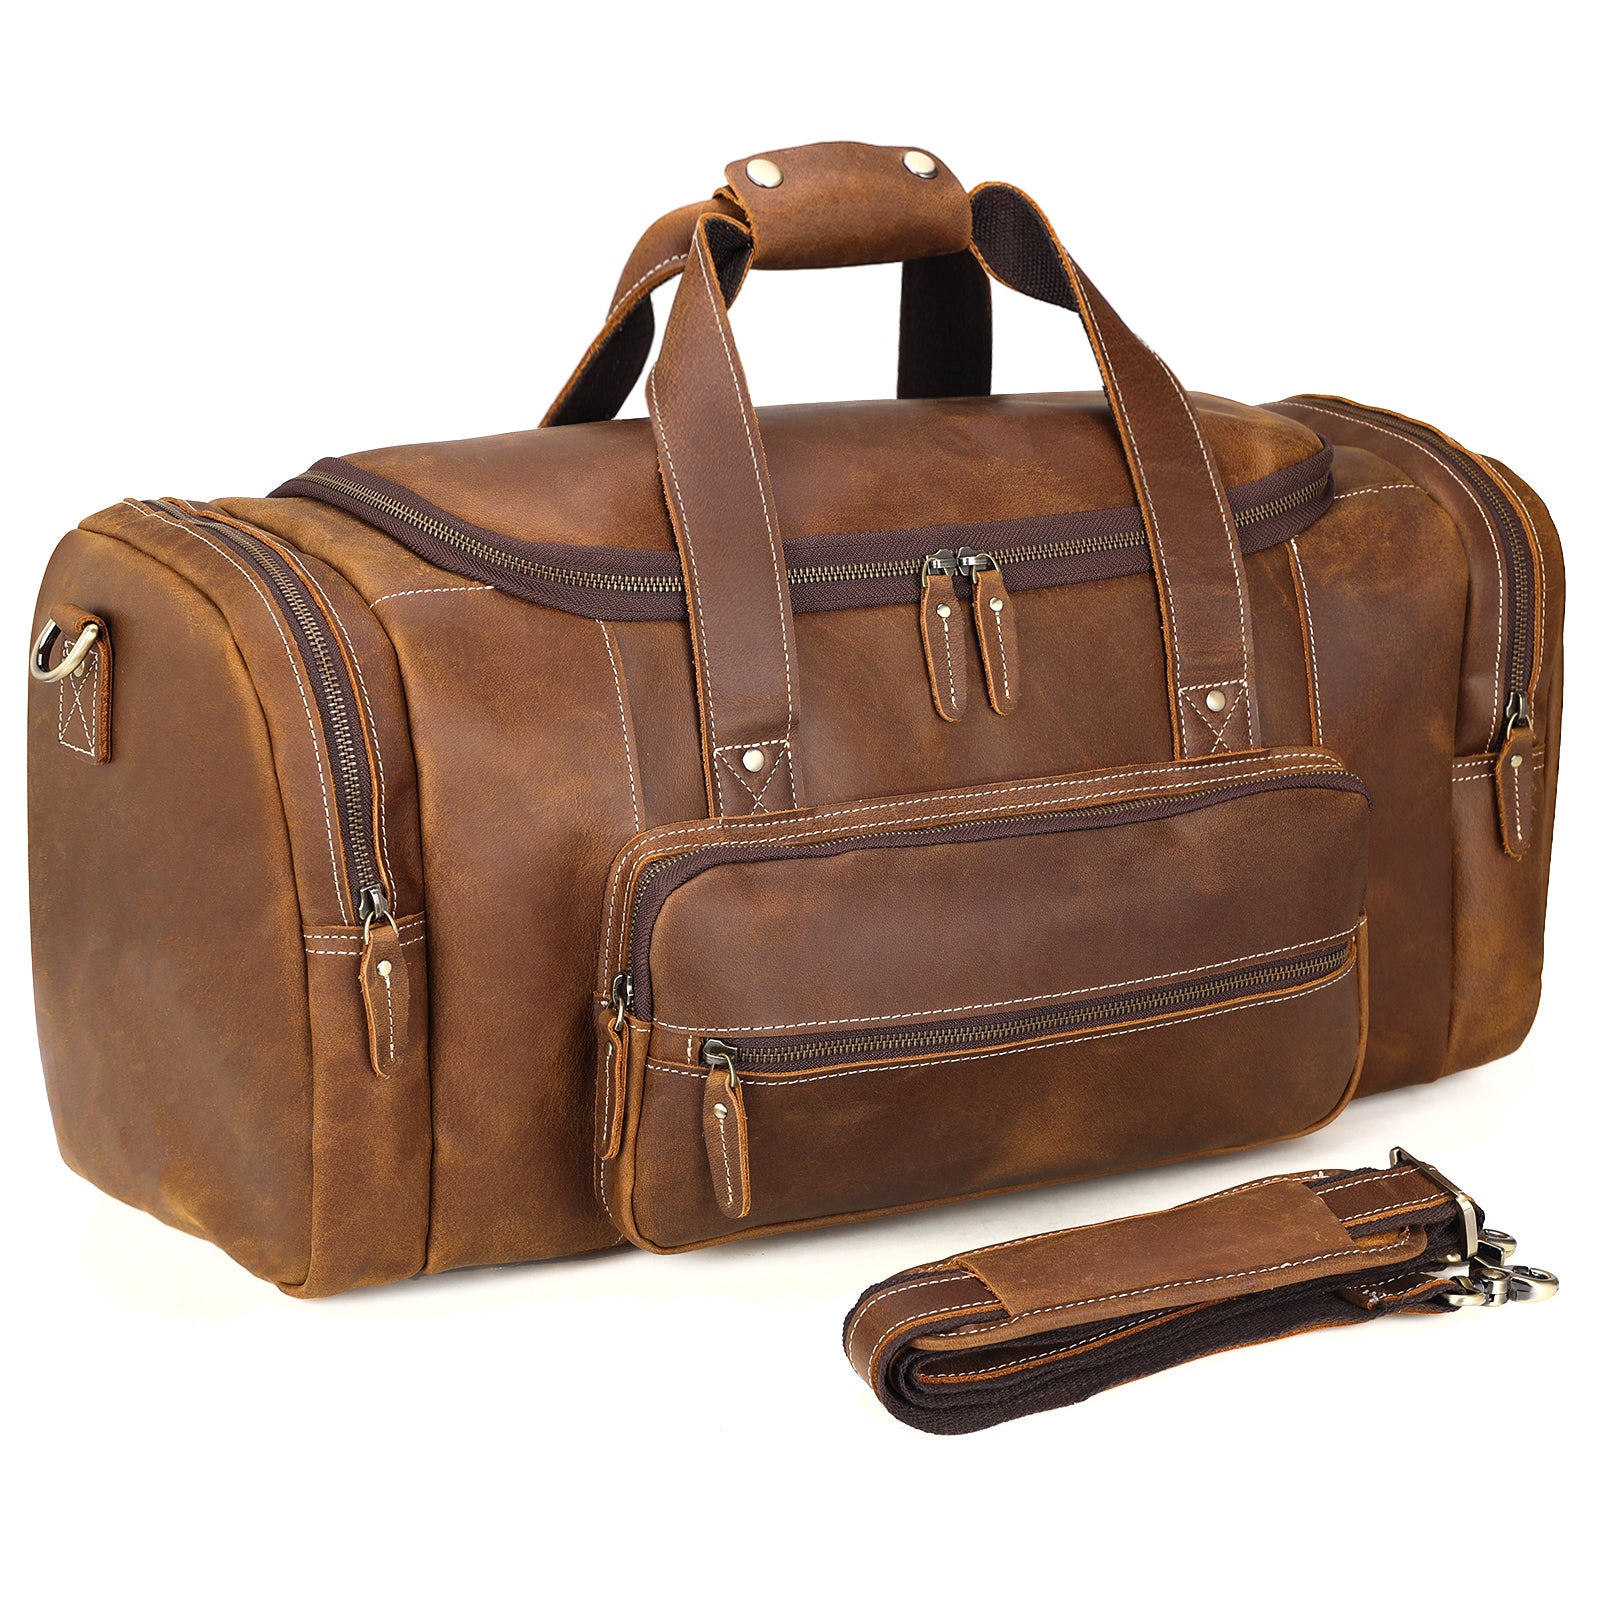 Polare 23" Full Grain Leather Gym Weekender Luggage Bag (Light Brown)